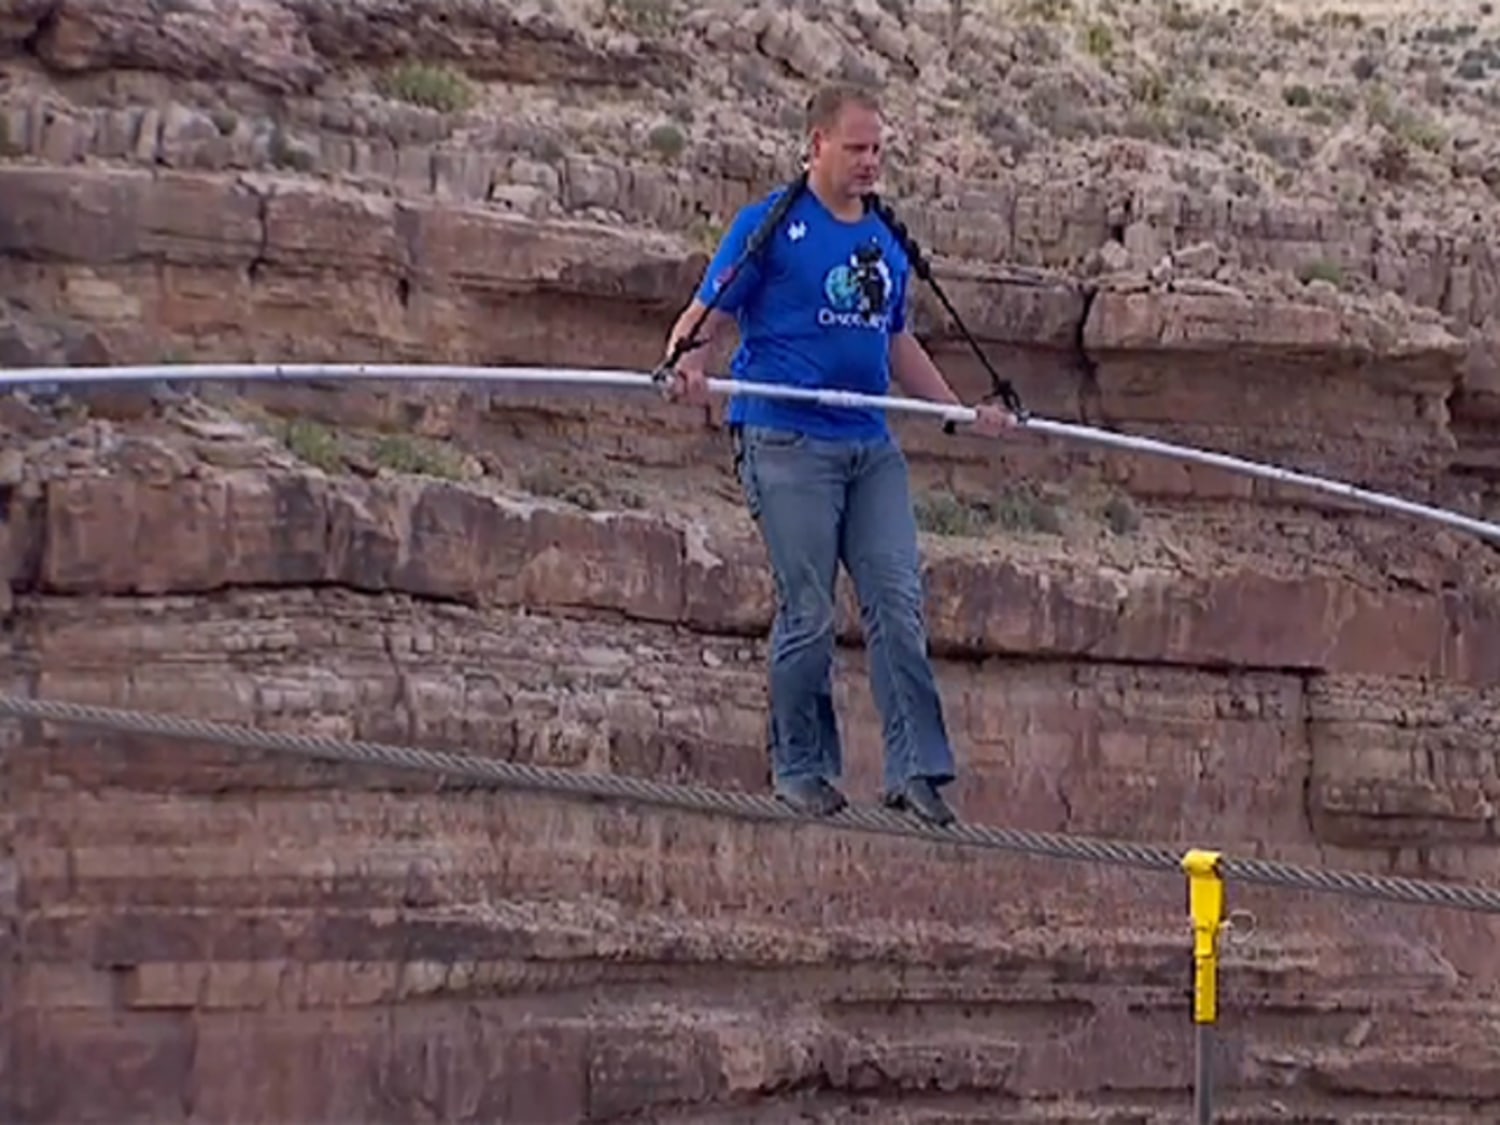 He did it! Daredevil Nik Wallenda wire walks across the Grand Canyon